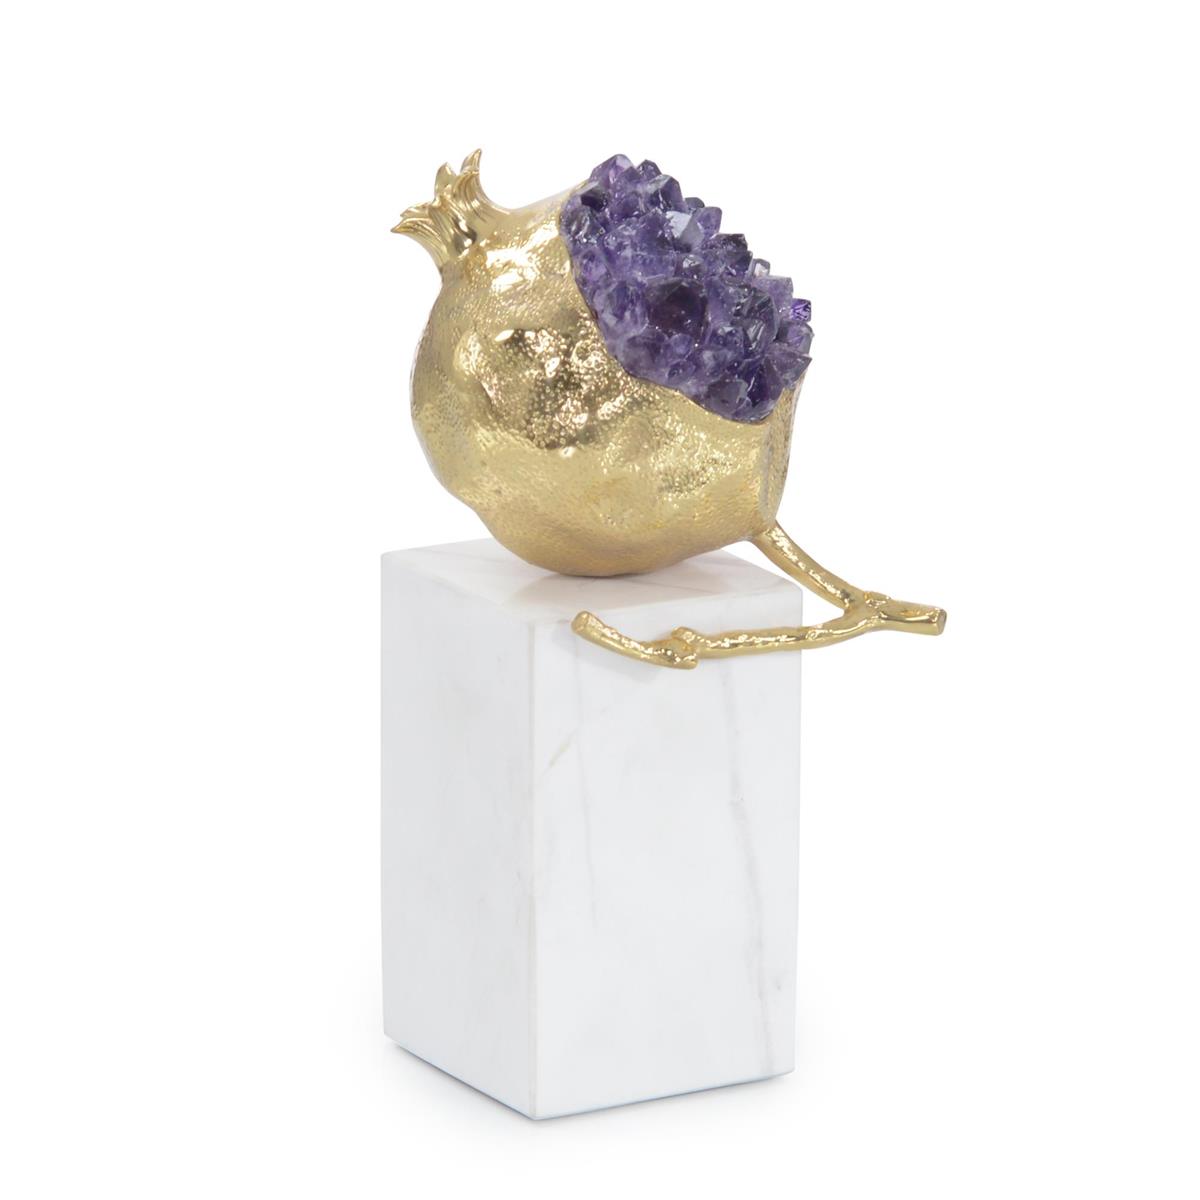 Brass and Amethyst Pomegranate Sculpture-John Richard-JR-JRA-13158-Decorative ObjectsII-2-France and Son